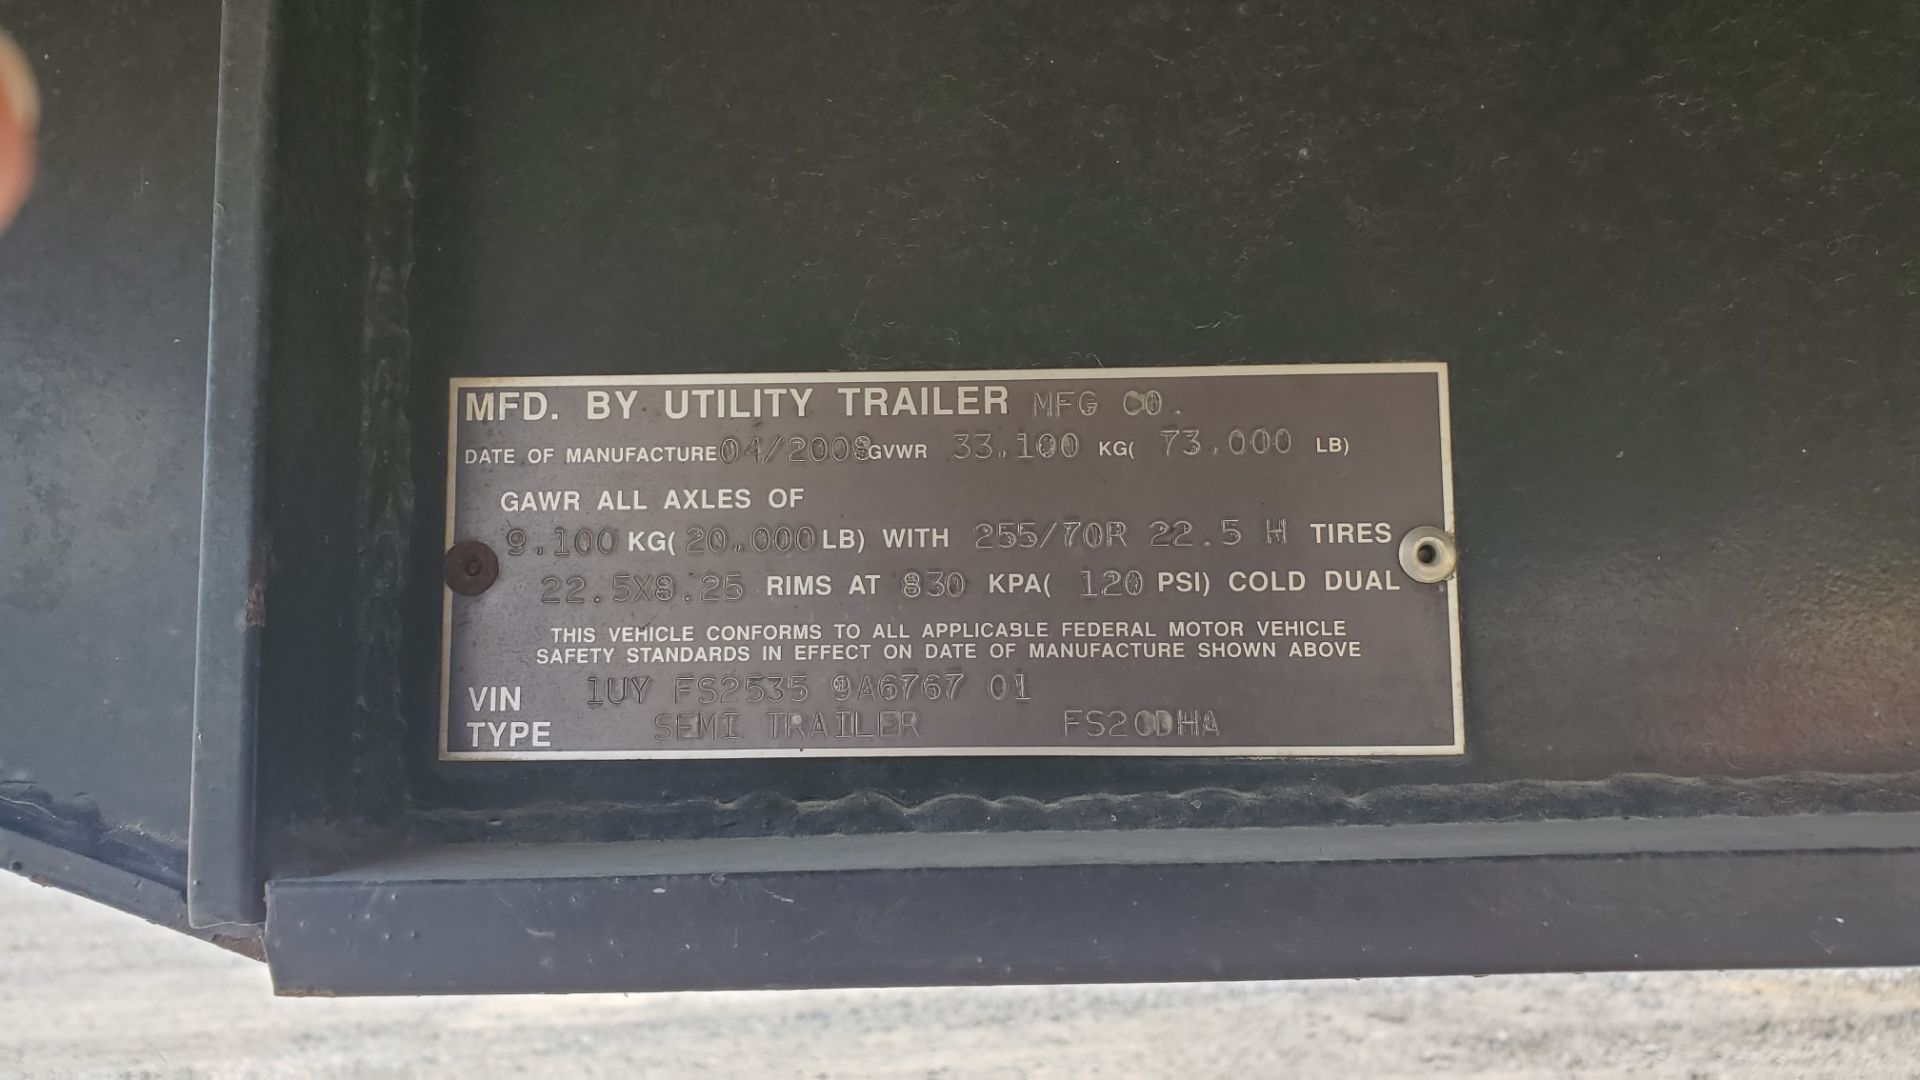 2008 Utility 53 ft. Drop Deck Tandem Axle Semi Trailer, VIN: 1UY FS2535 9A6767 01; with Conestoga - Image 8 of 8